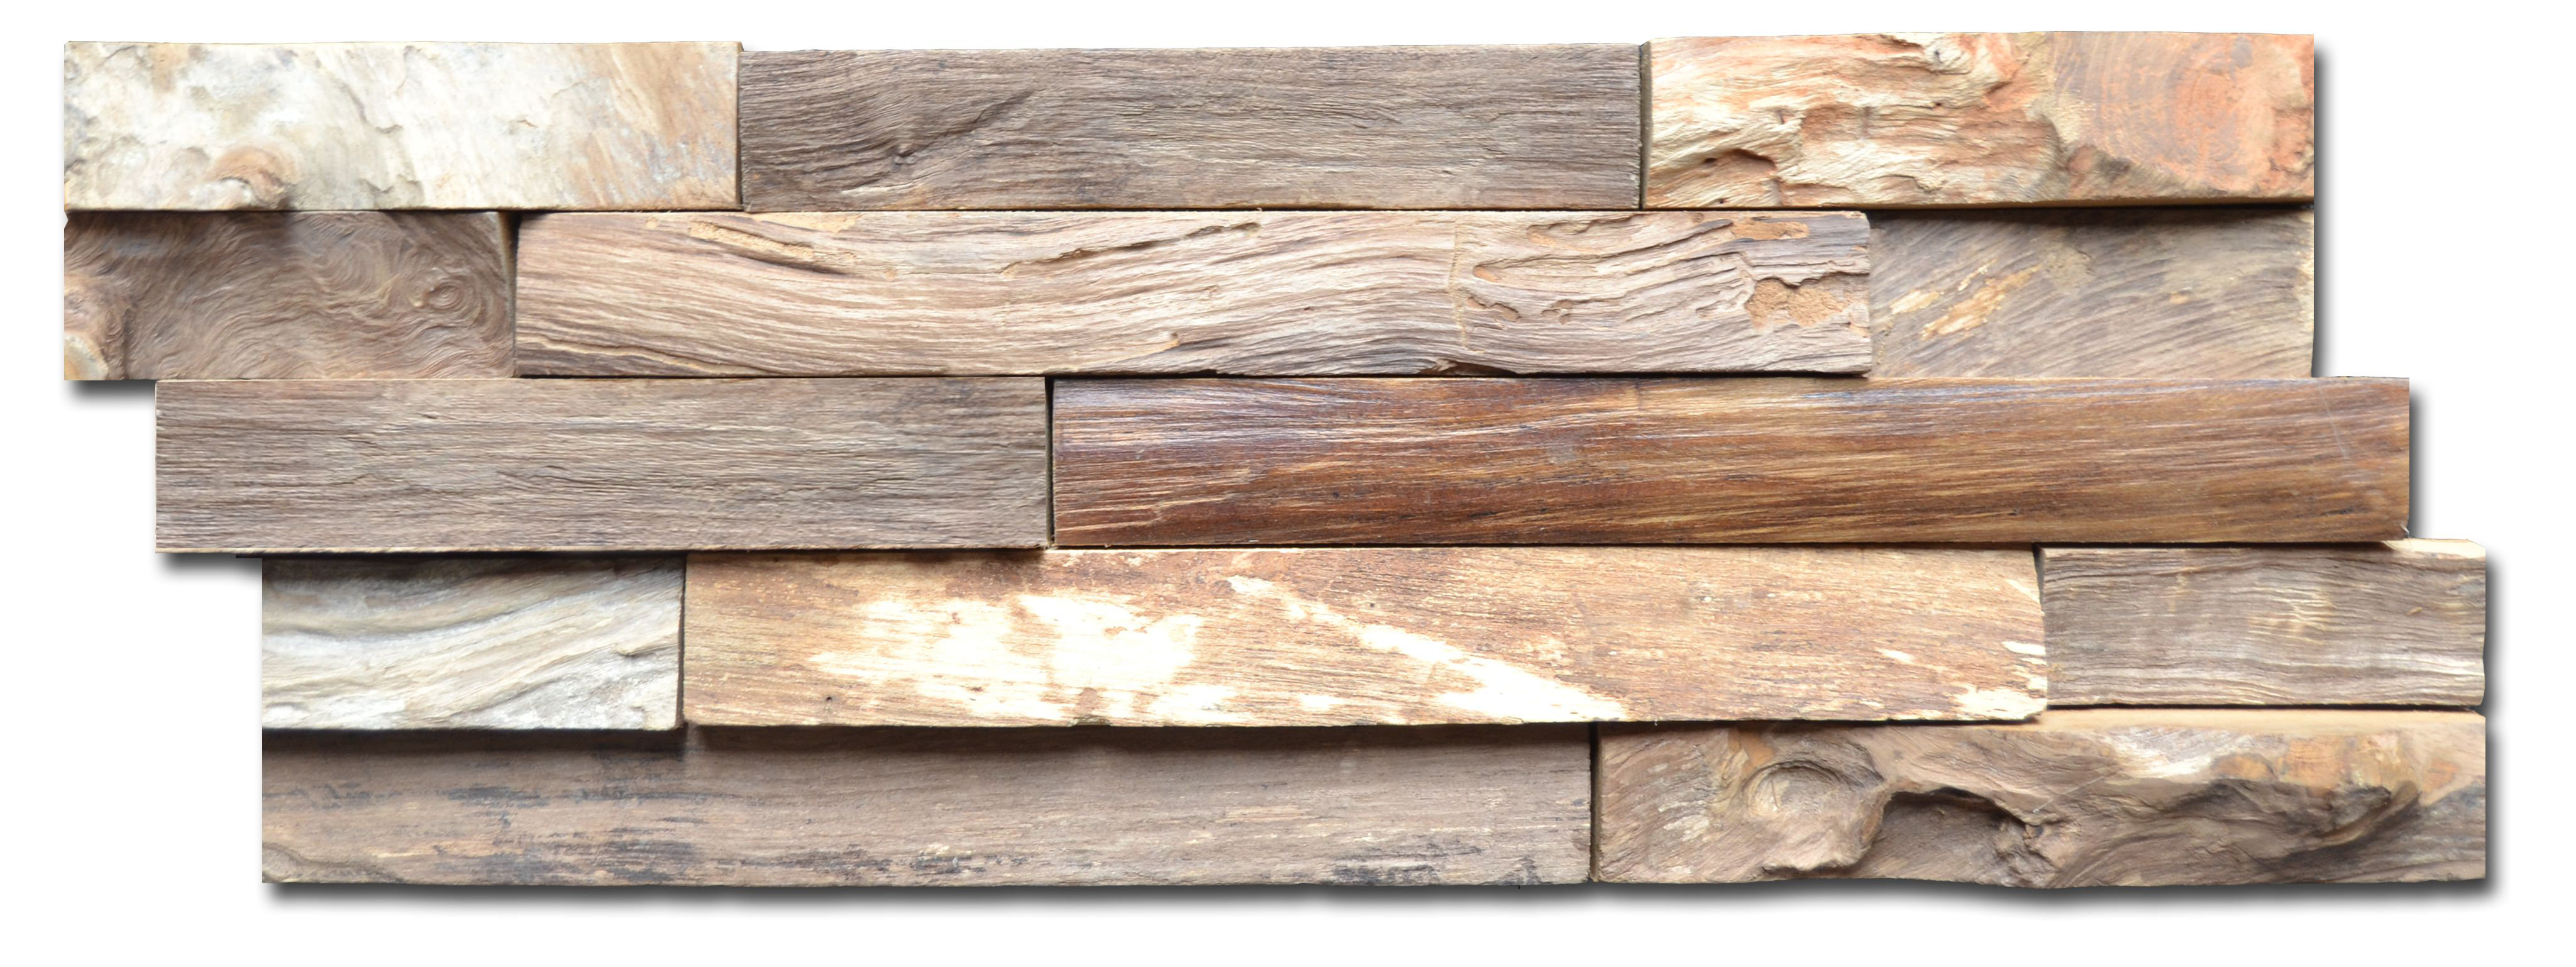 Tropical Hardwood Reclaimed Wood Wall Planks, 40 sq ft bundle